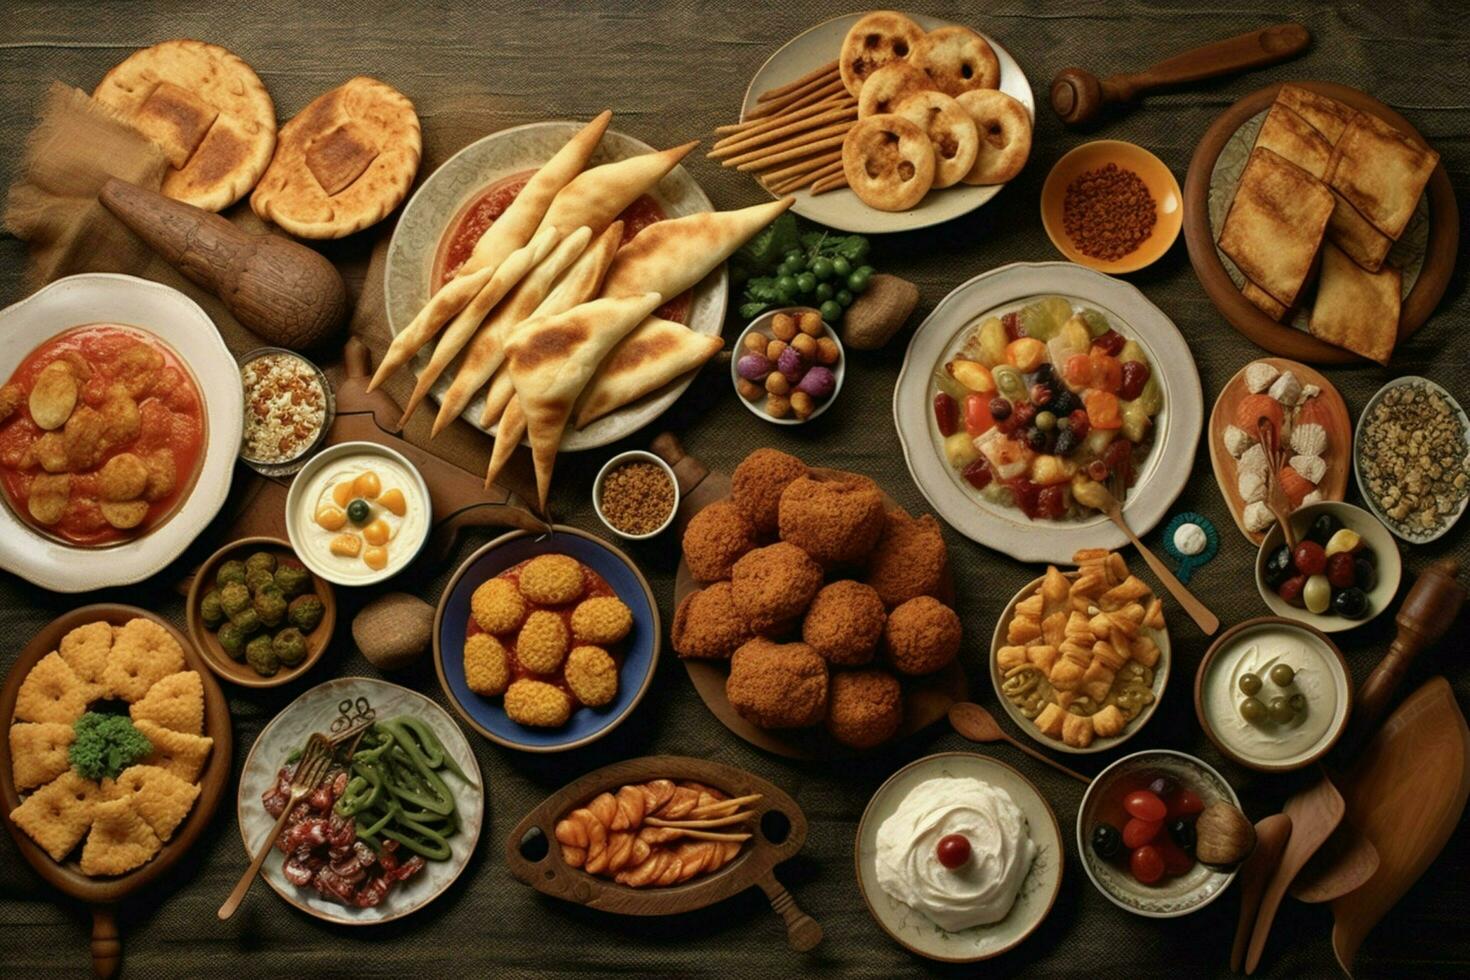 national food of Cyprus photo